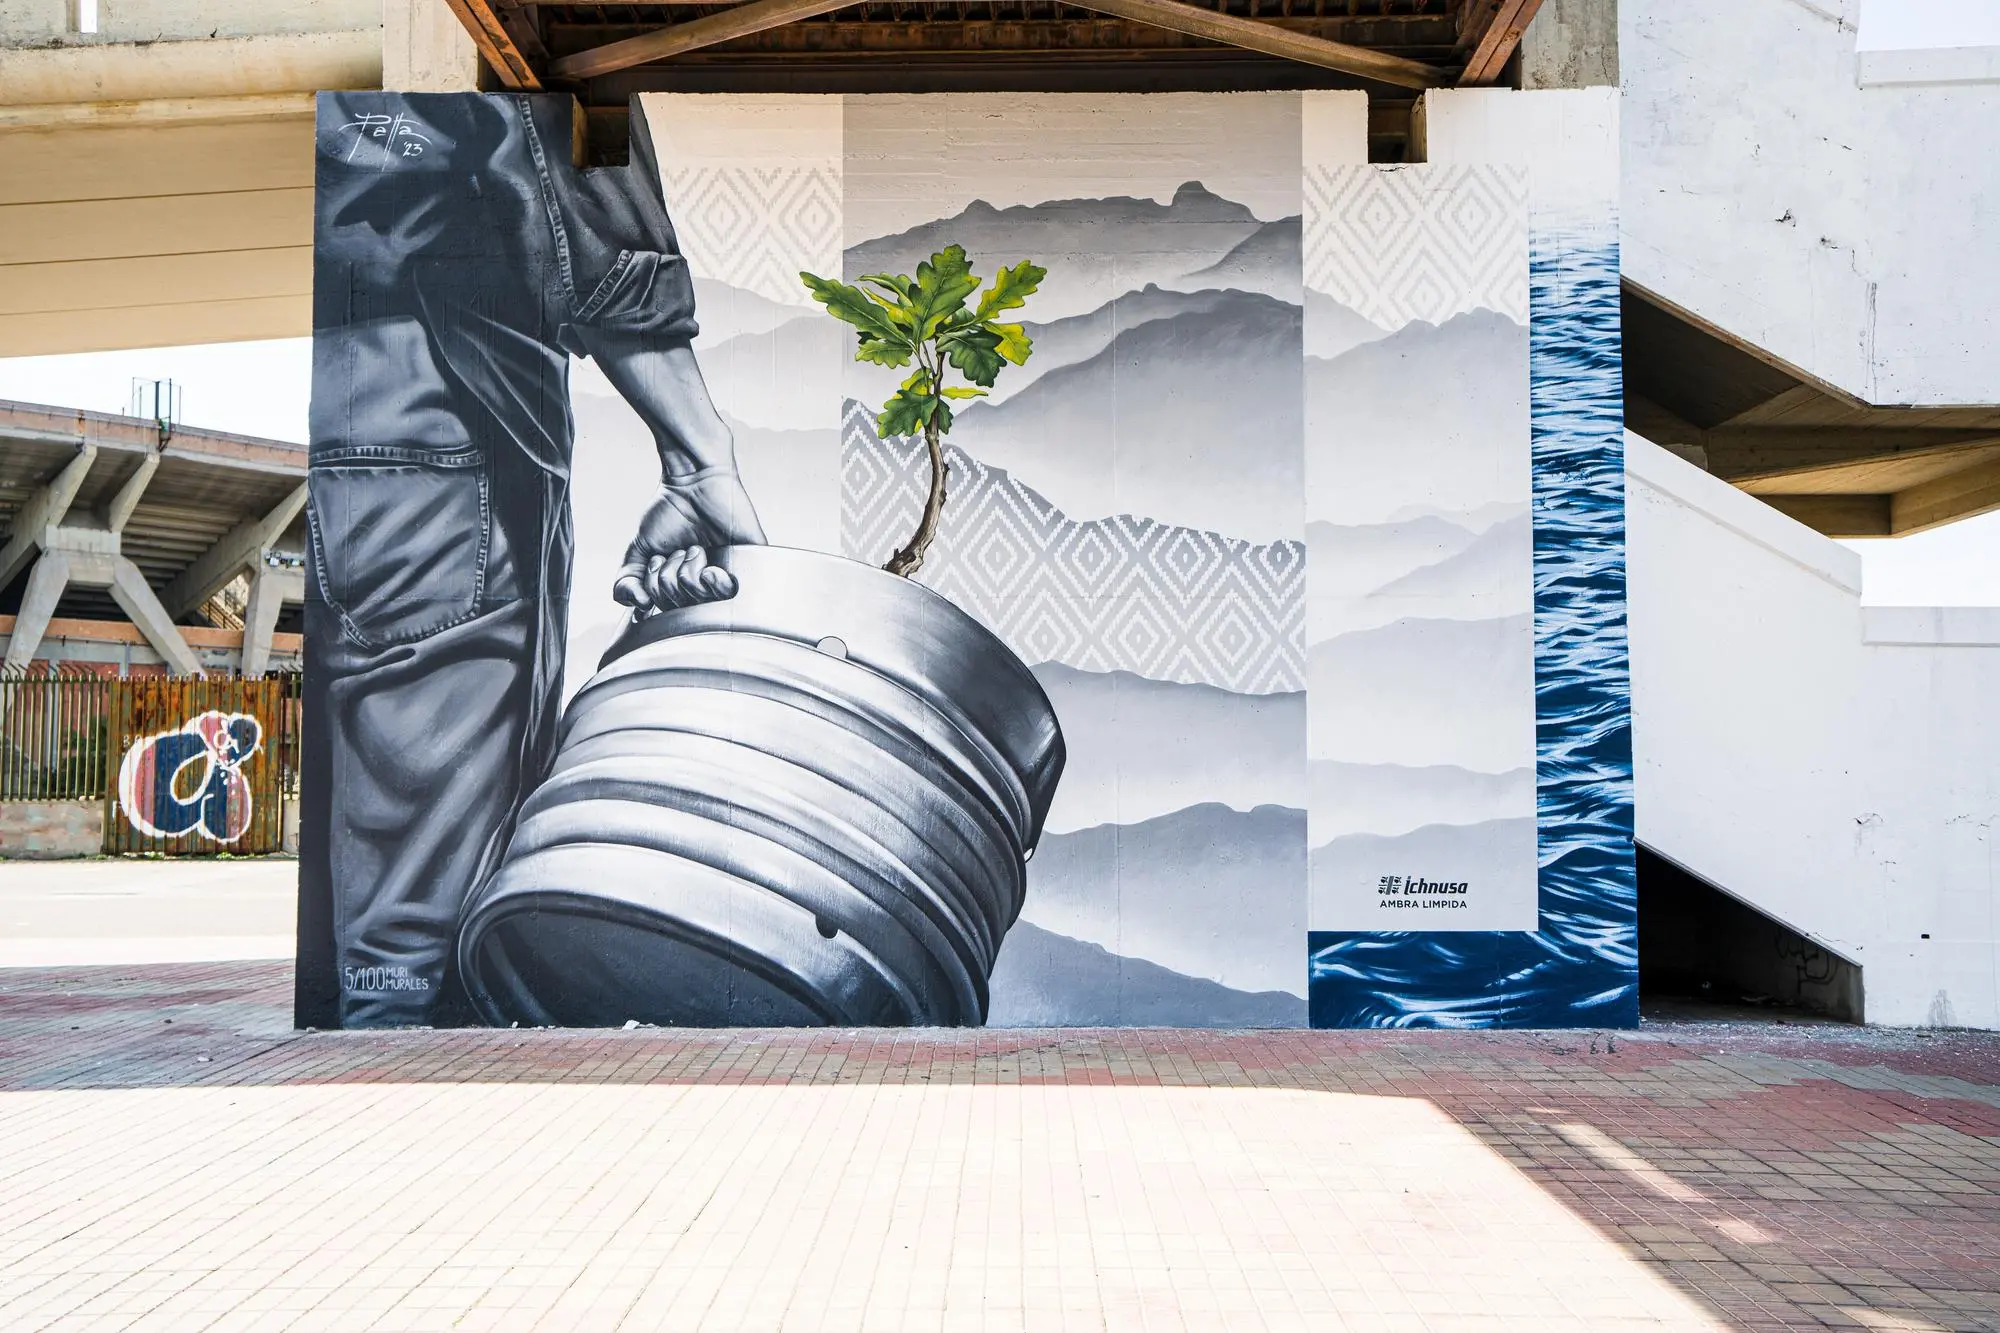 Il murale Ichnusa (foto Mascia)